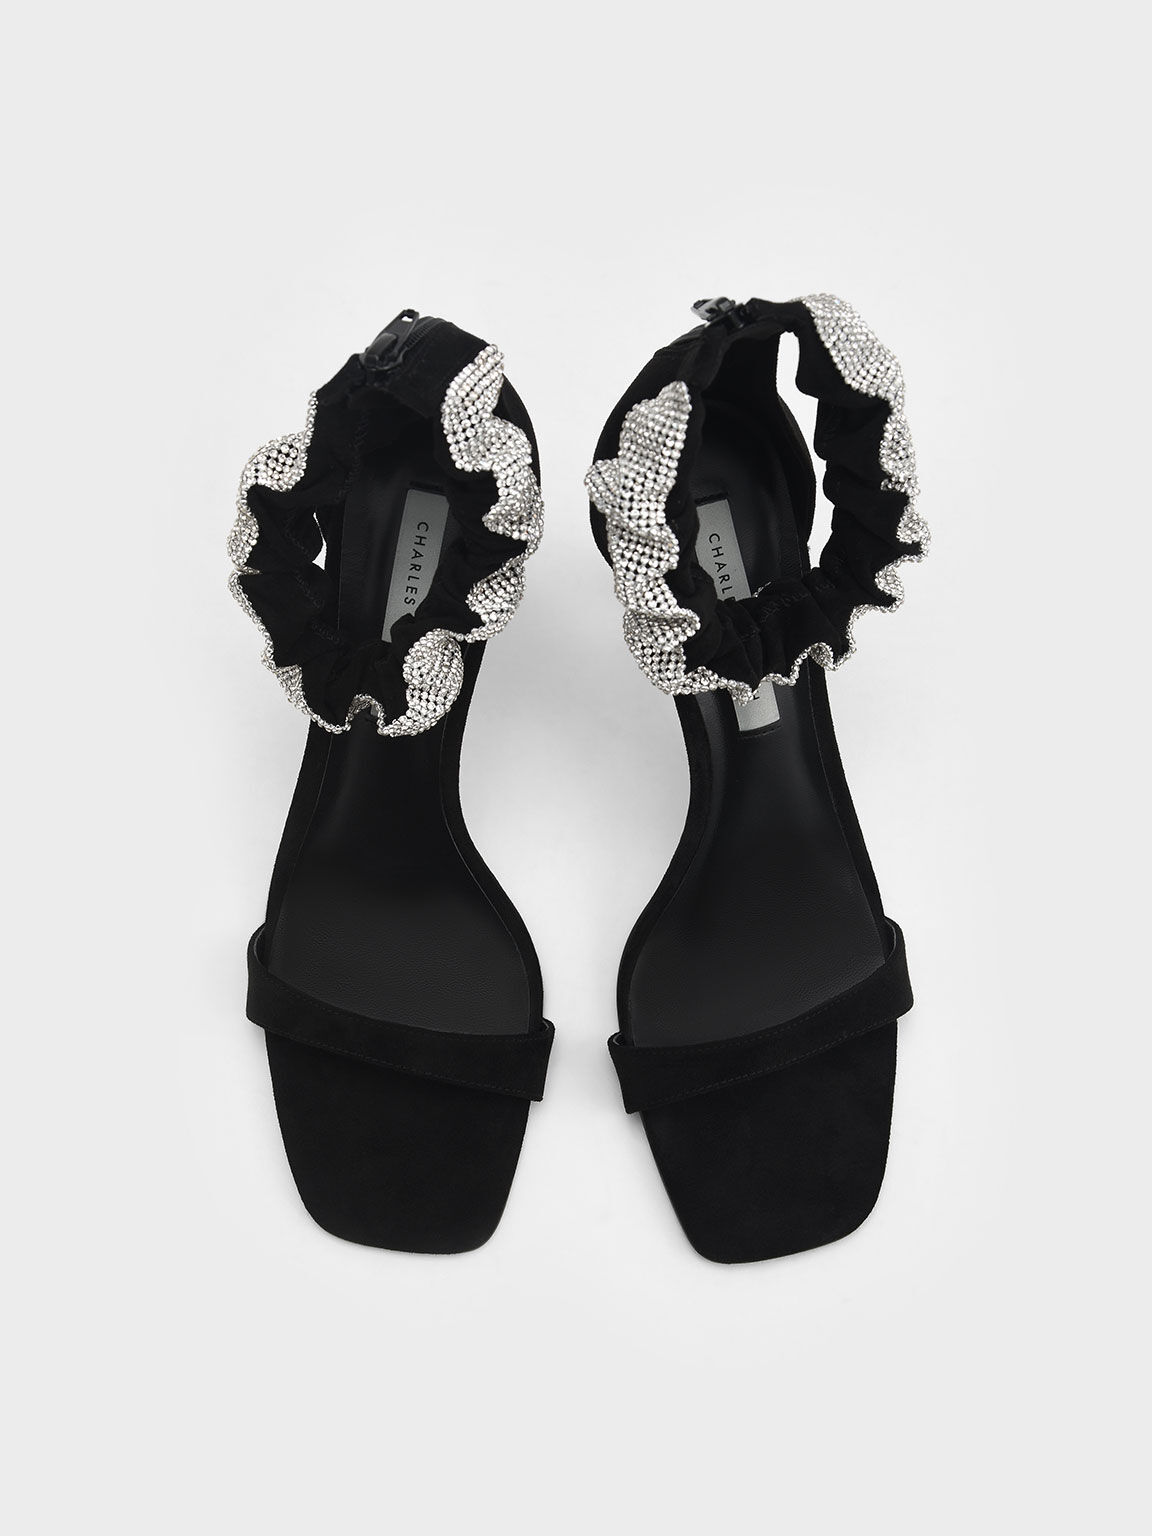 Gem-Encrusted Ruffle Strap Stiletto Sandals, Black, hi-res